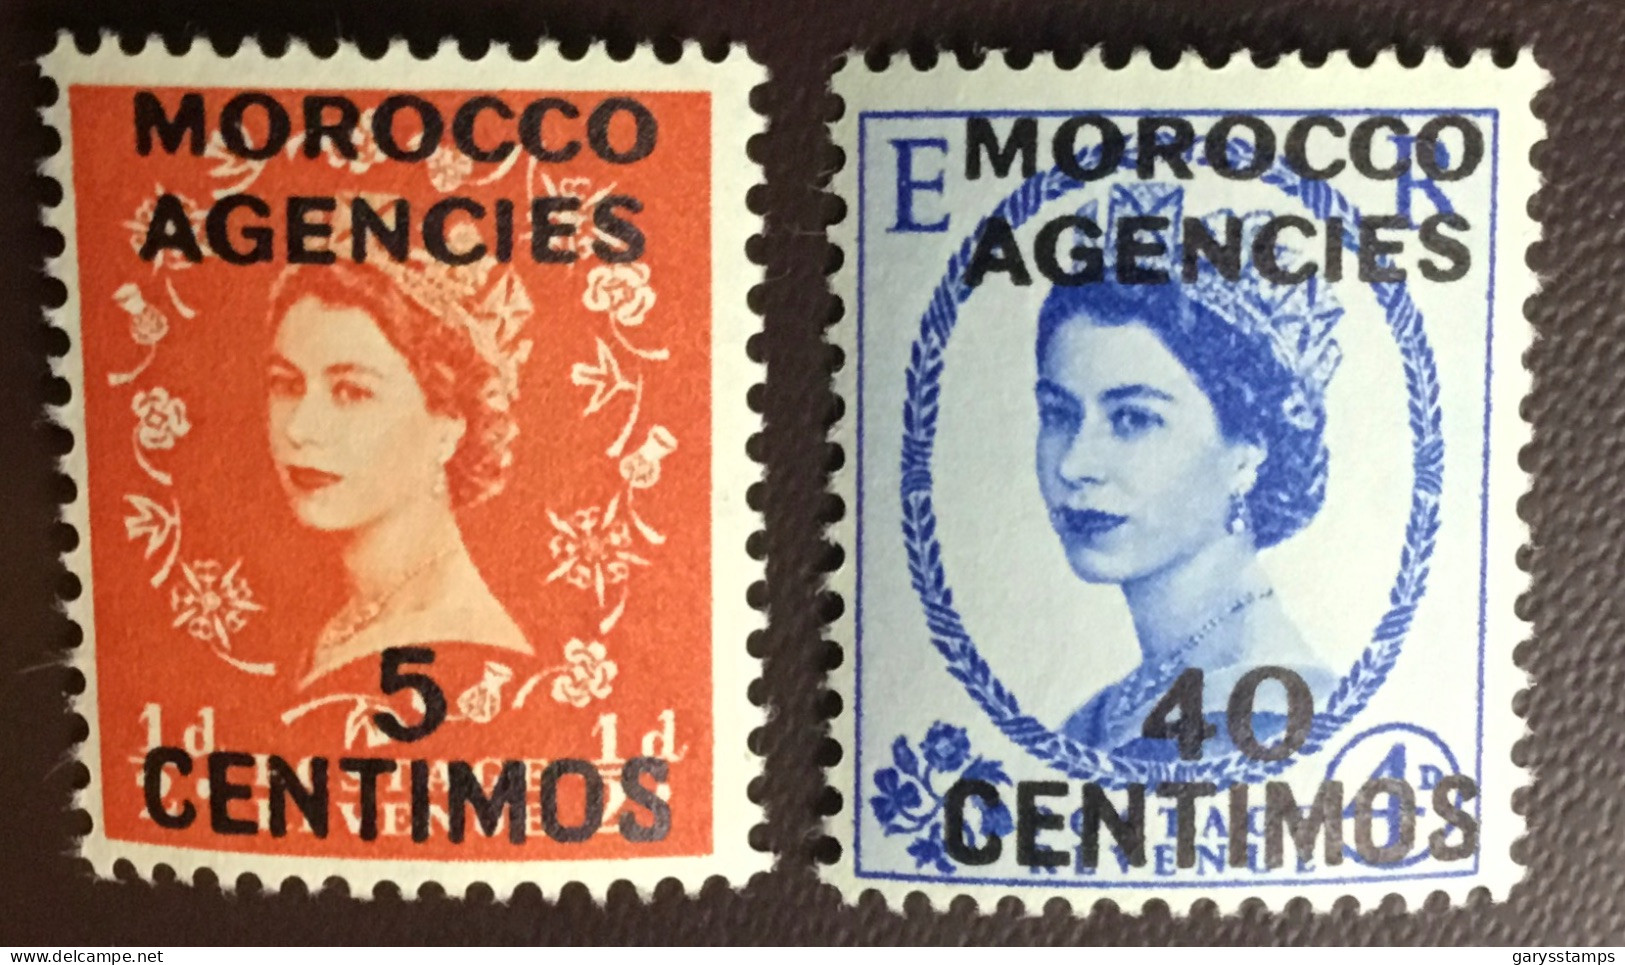 Morocco Agencies Spanish 1956 Definitives Set MNH - Morocco Agencies / Tangier (...-1958)